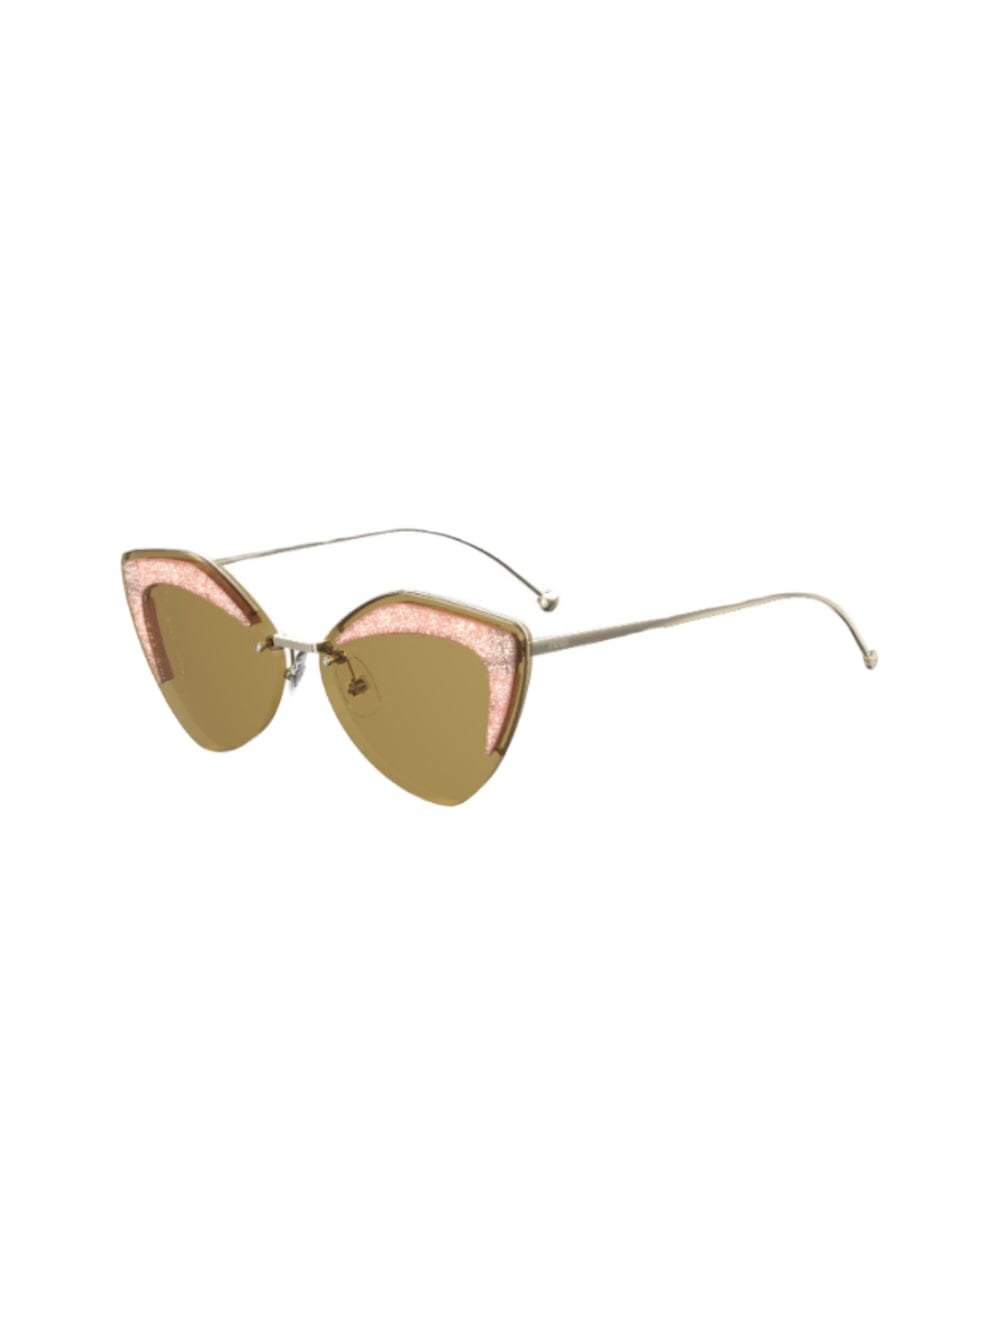 Fendi Eyewear Ff 0355 - Gold Sunglasses